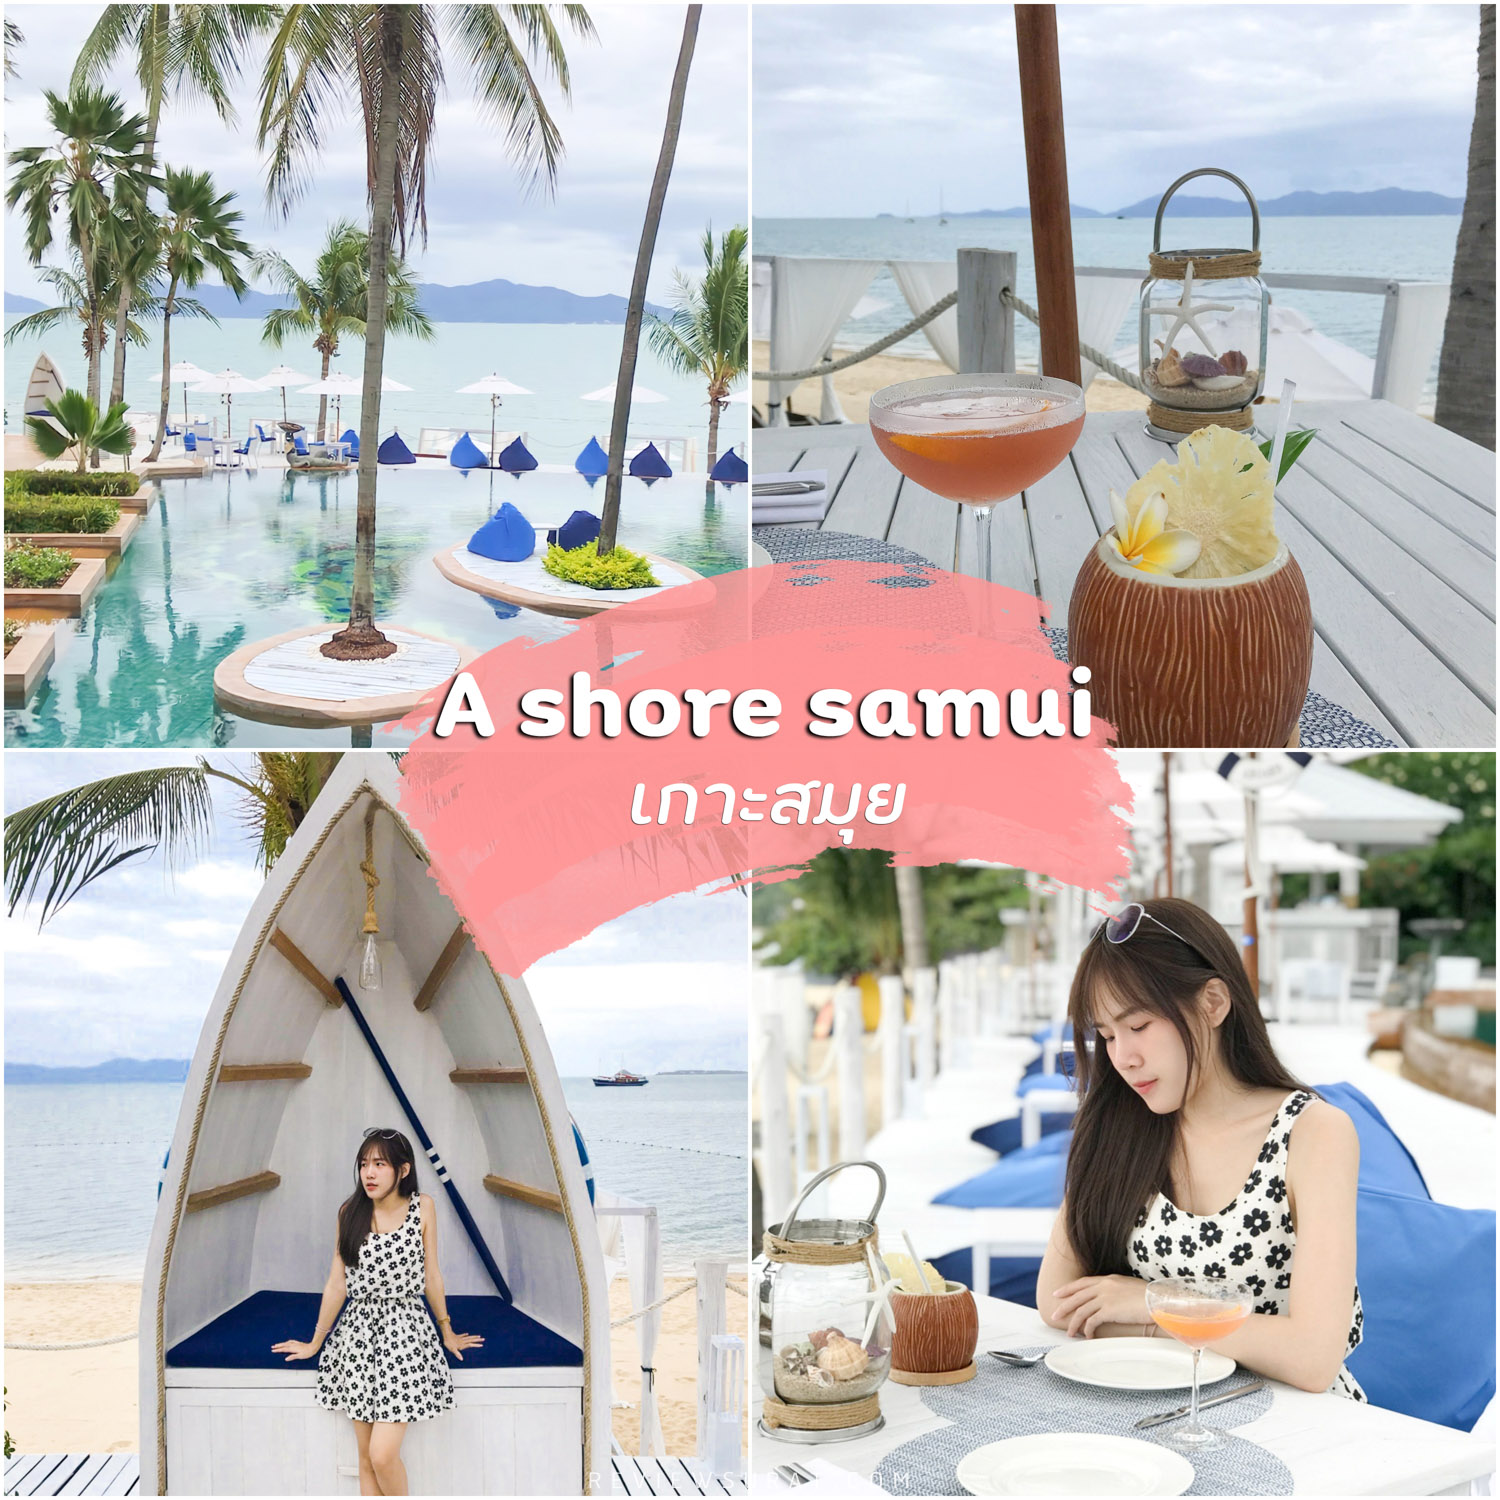 A.Shore Beach Bar Samui คาเฟ่เกาะสมุยในโรงแรม ติดทะเล พนักงานน่ารัก เครื่องดื่มอร่อยเบยย